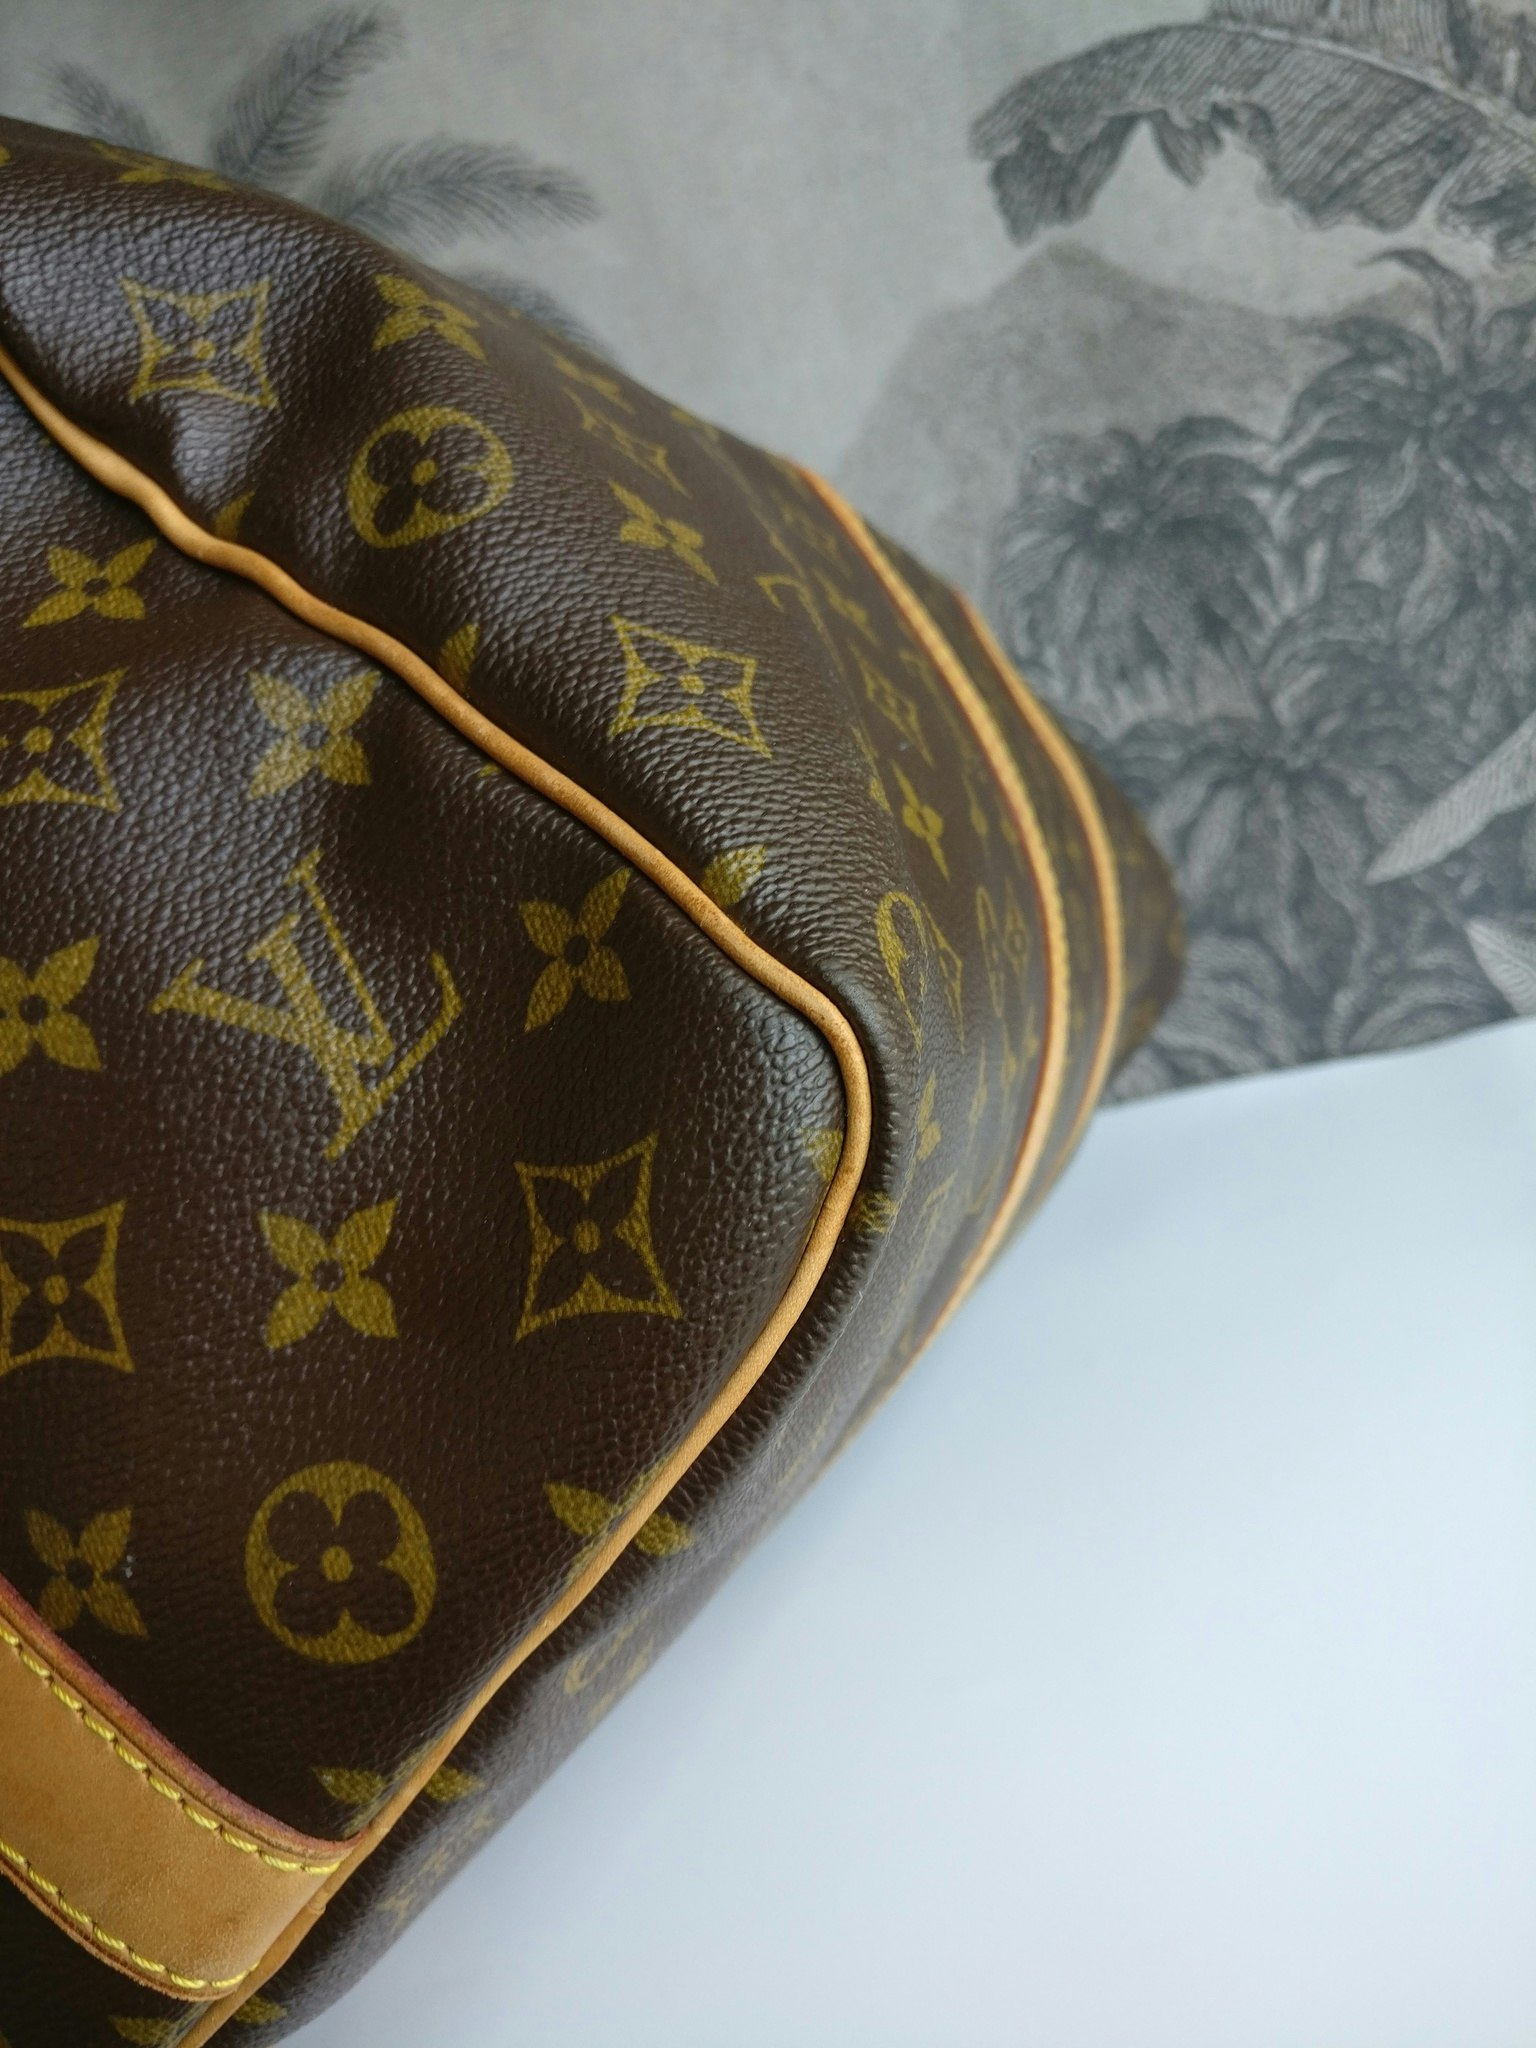 Louis Vuitton Keepall 50 Bandouliere